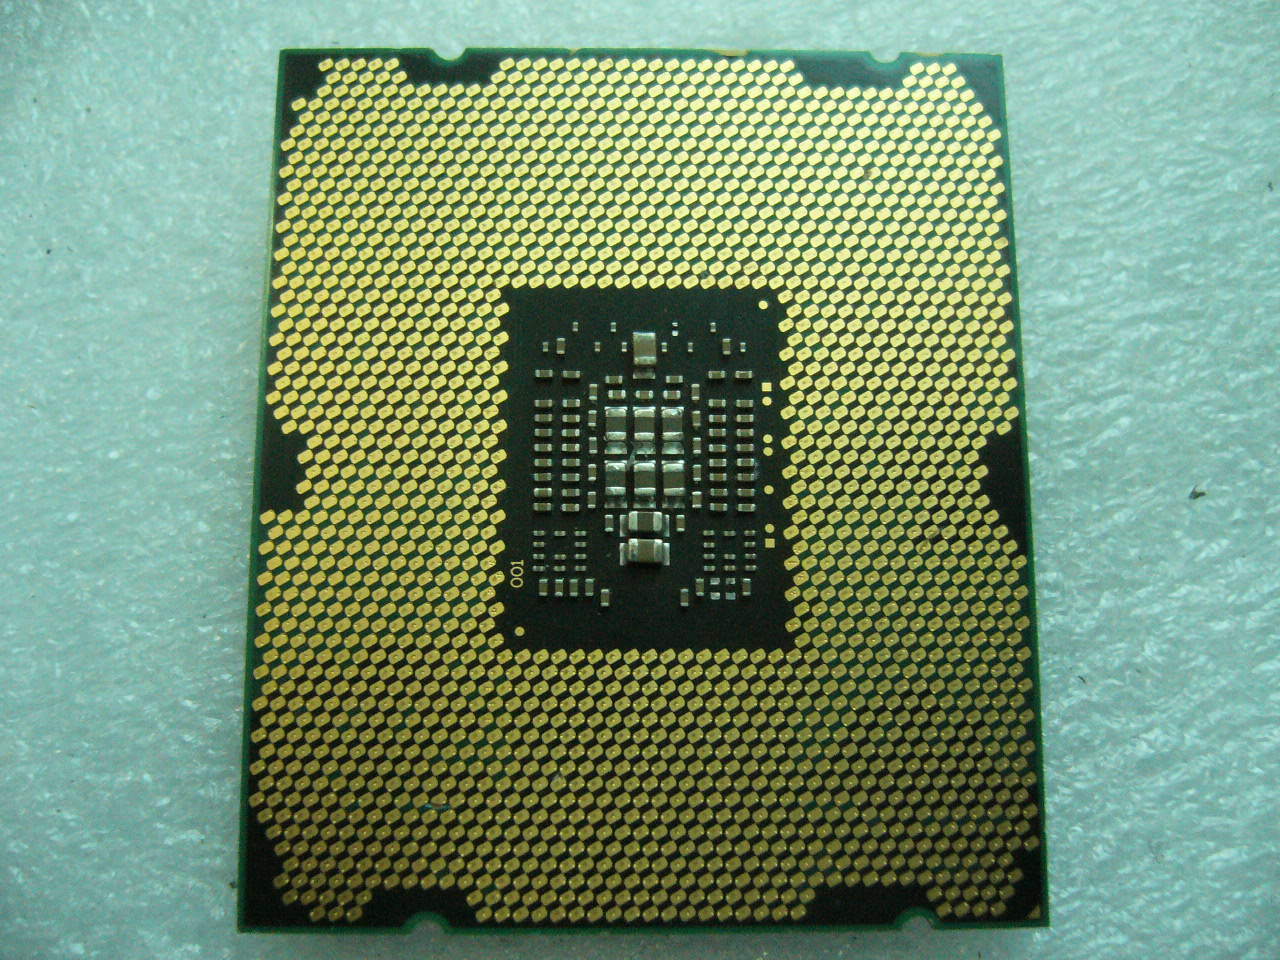 QTY 1x Intel CPU E5-1620 CPU 4-Cores 3.6Ghz LGA2011 SR0LC NOT WORKING - Click Image to Close